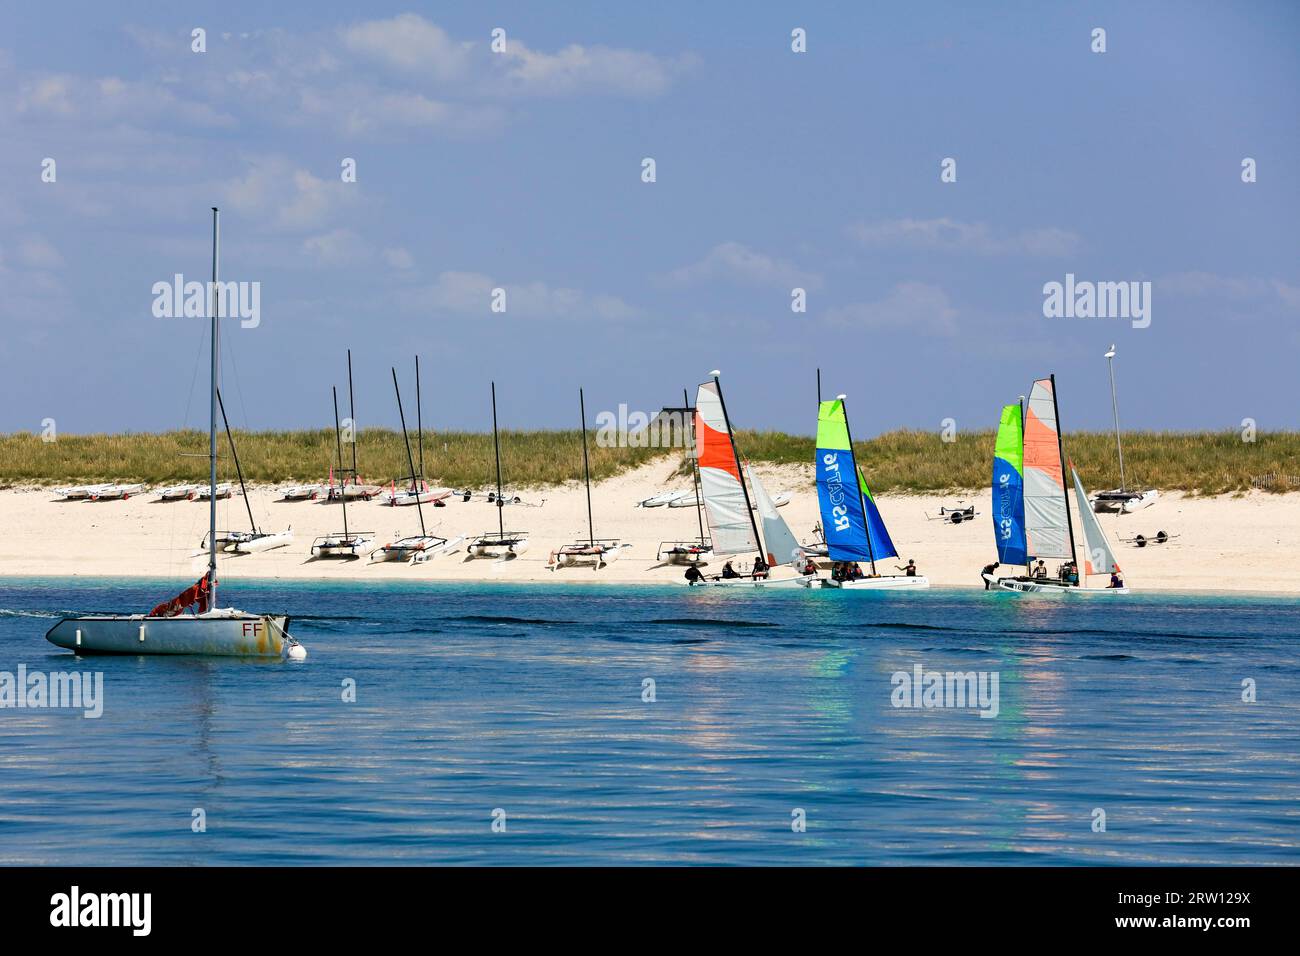 Sandy beach beach of the island Ile de Penfret with catamarans of the sailing school Les Glenans, Glenan Islands, archipelago of the Glenan in the Stock Photo